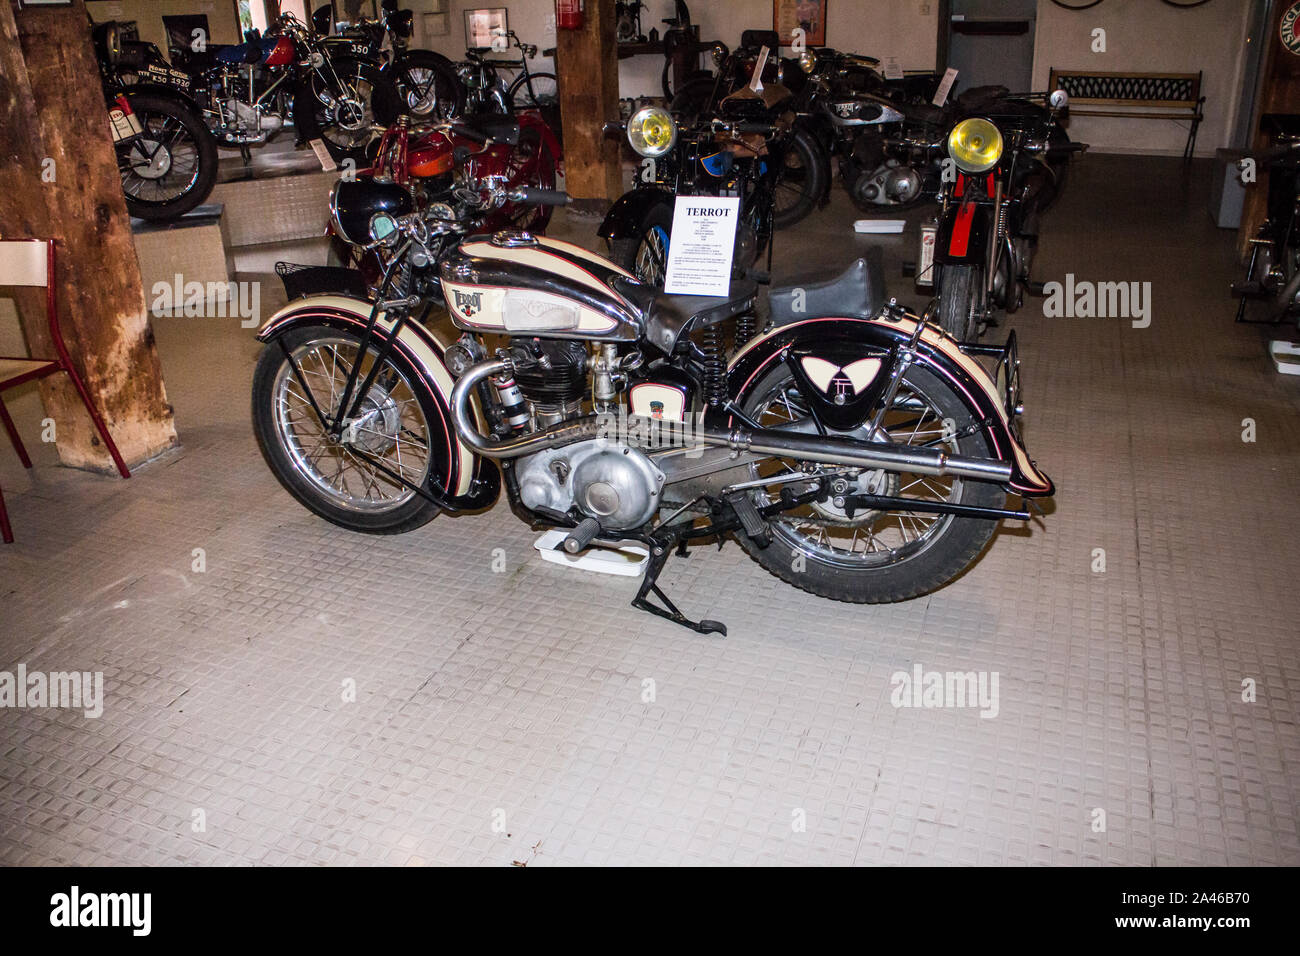 Marseille (Frankreich) Musée de la Moto - Motorrad Museum: Terrot RSSE 500  cc 1938 (Französisch Stockfotografie - Alamy